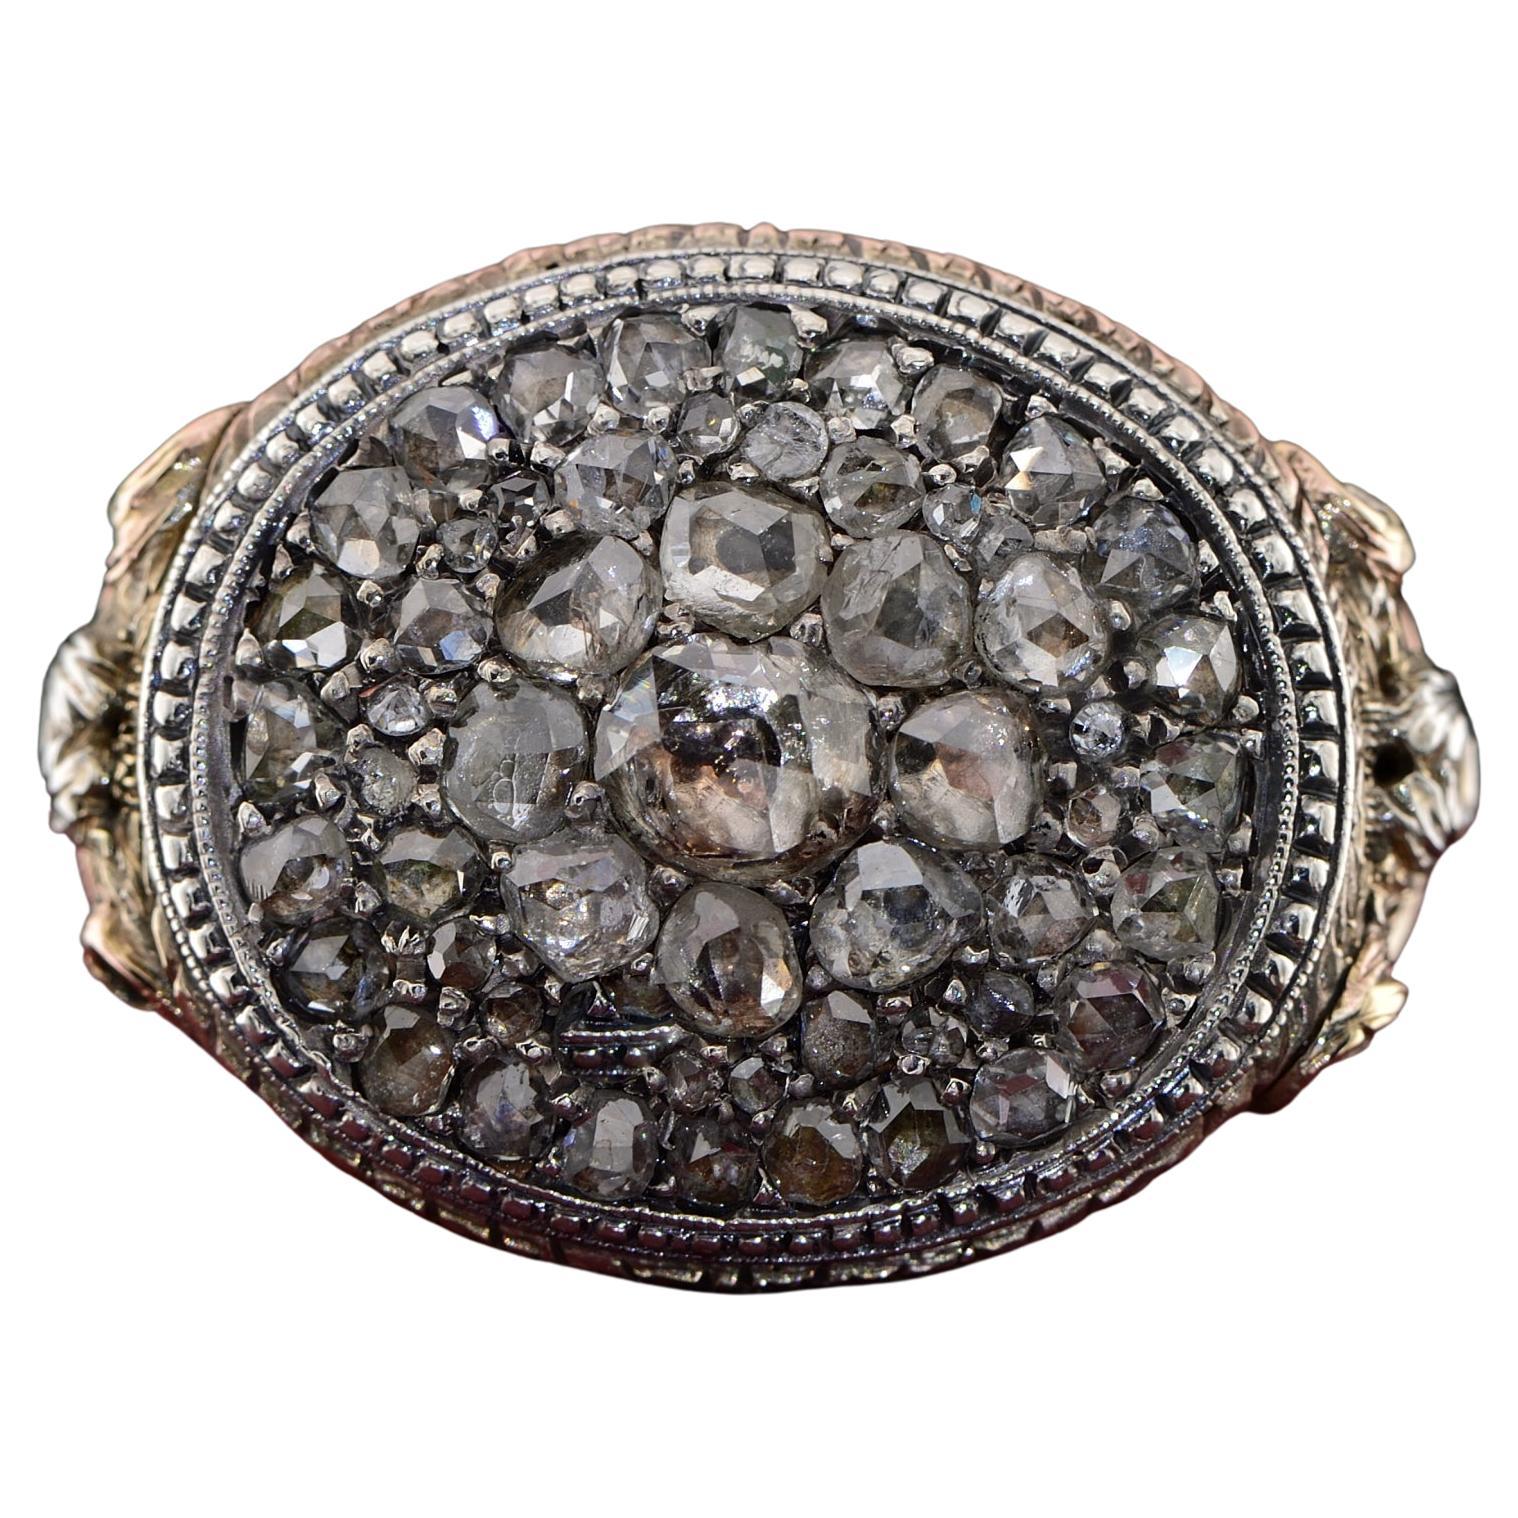 Antique 19th Century Rose Cut Diamond 18 KT Ring